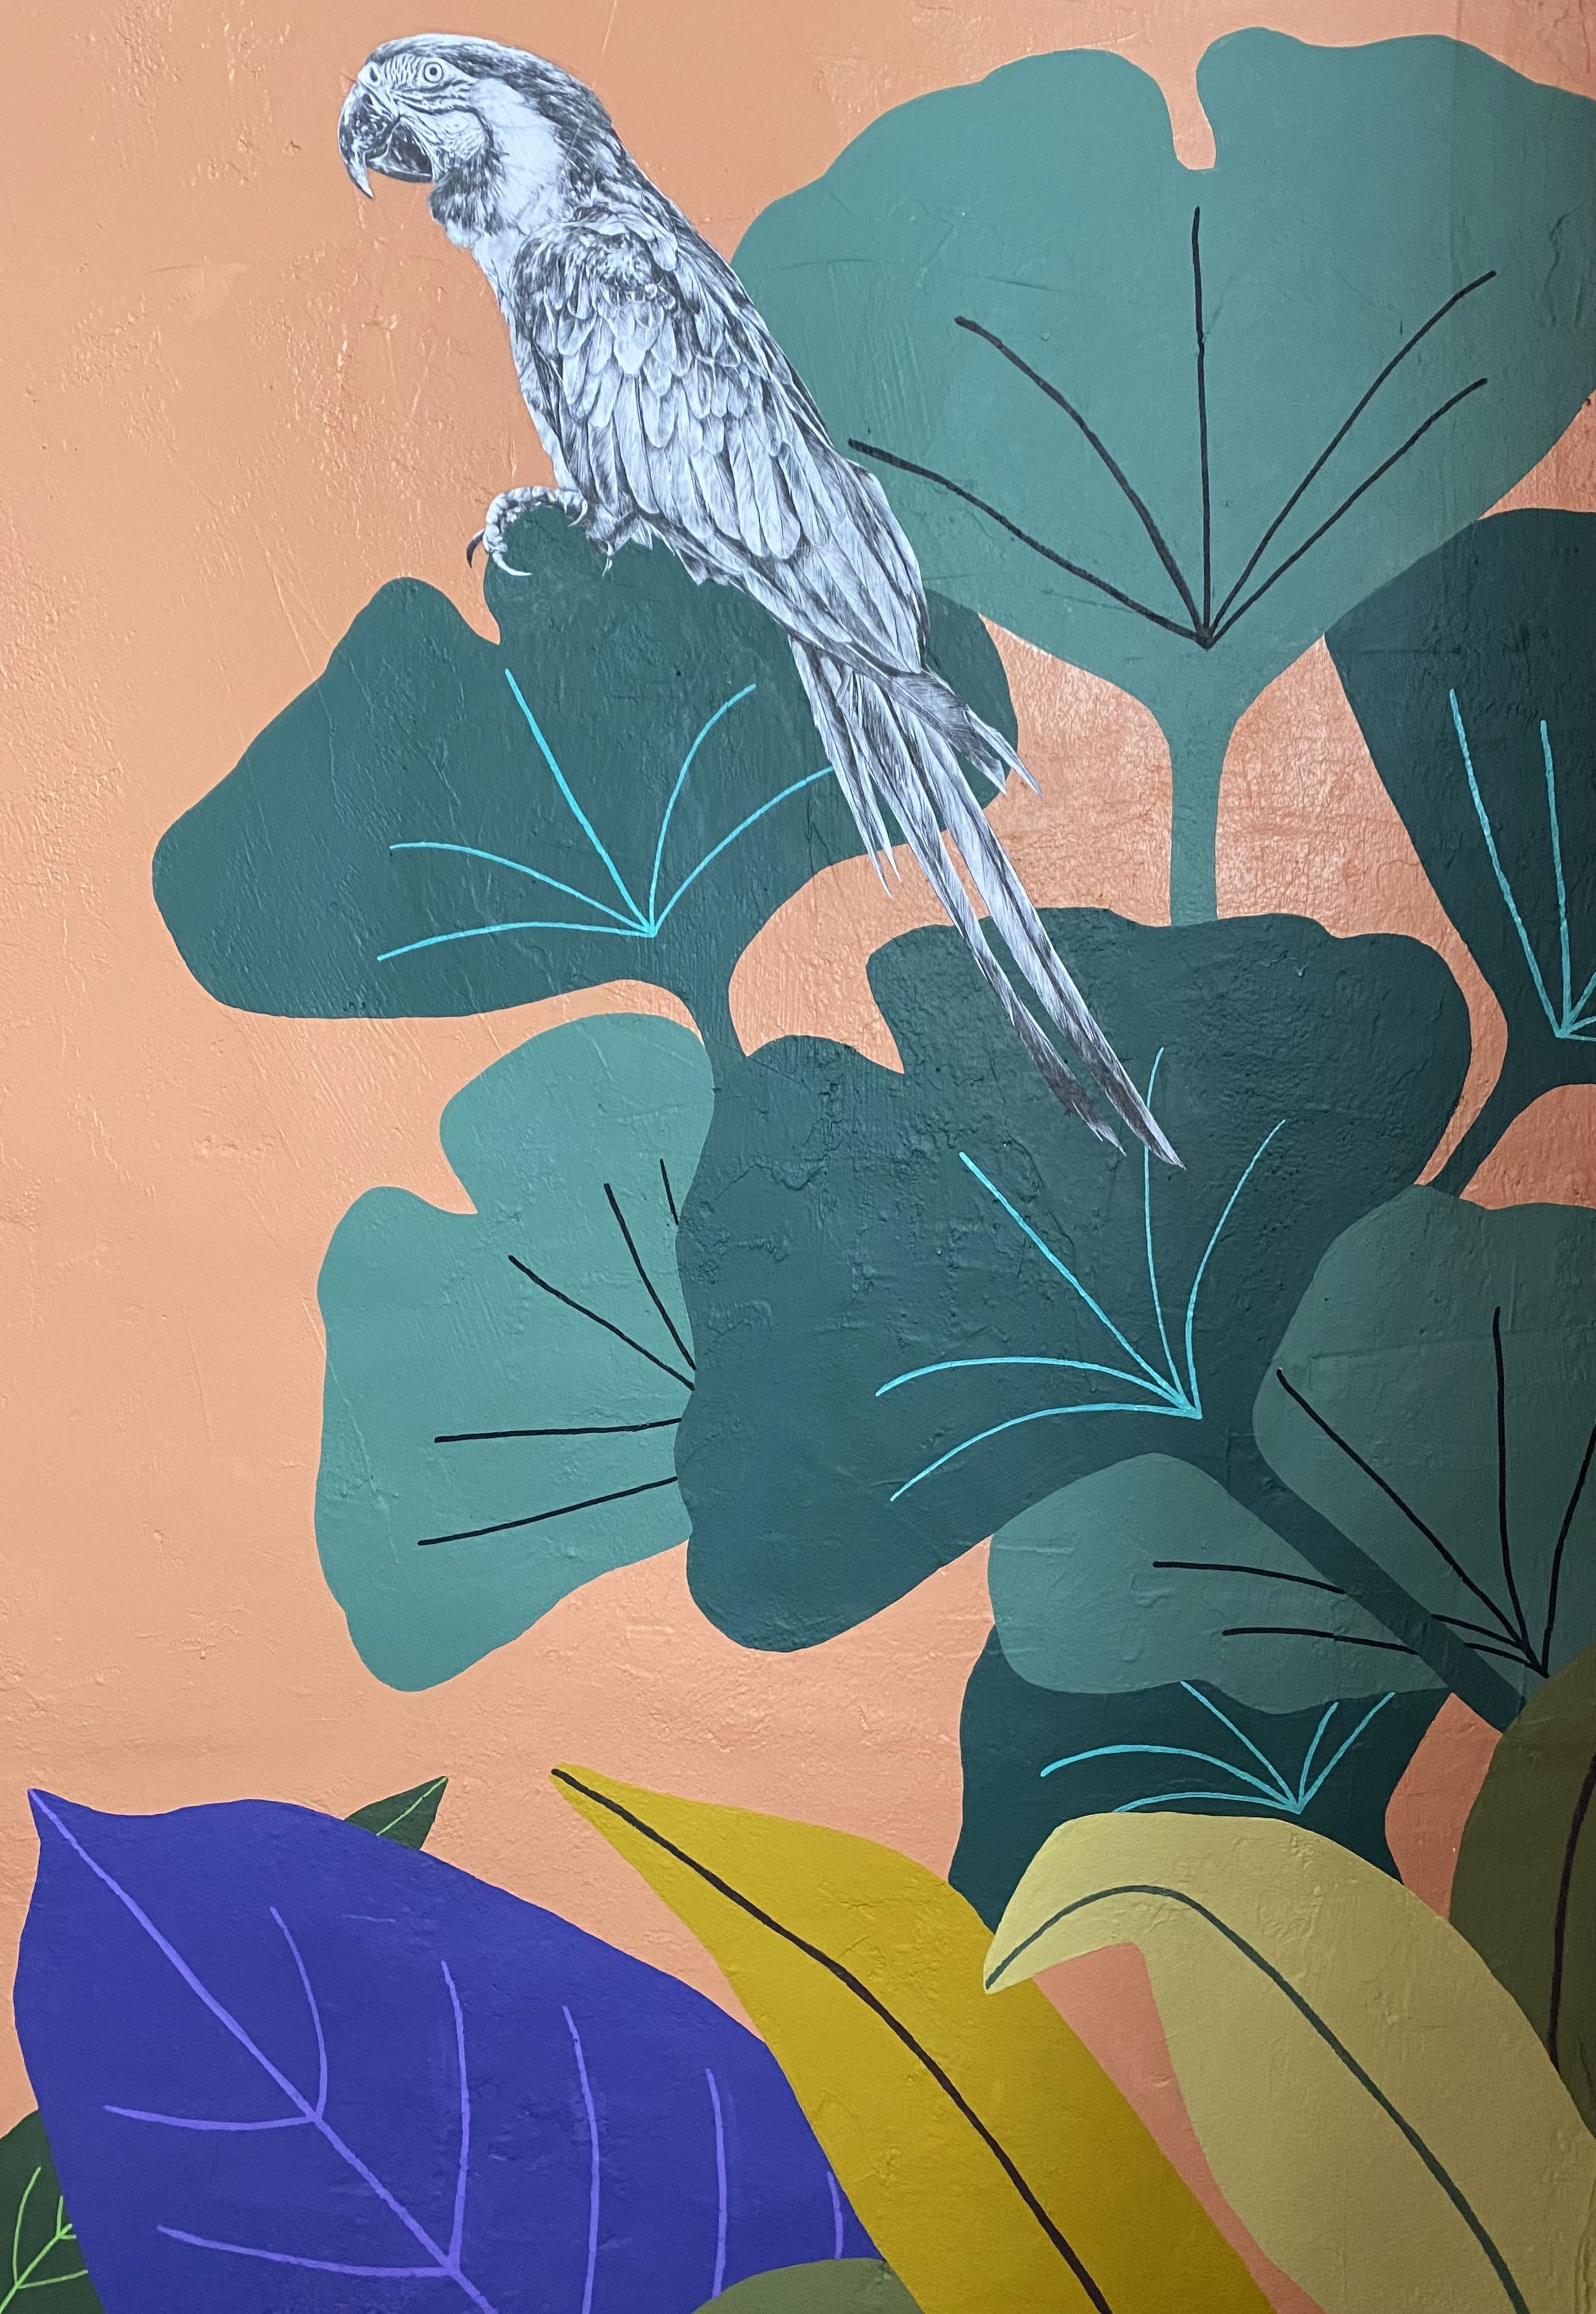 lifehouse mural parrot.jpg